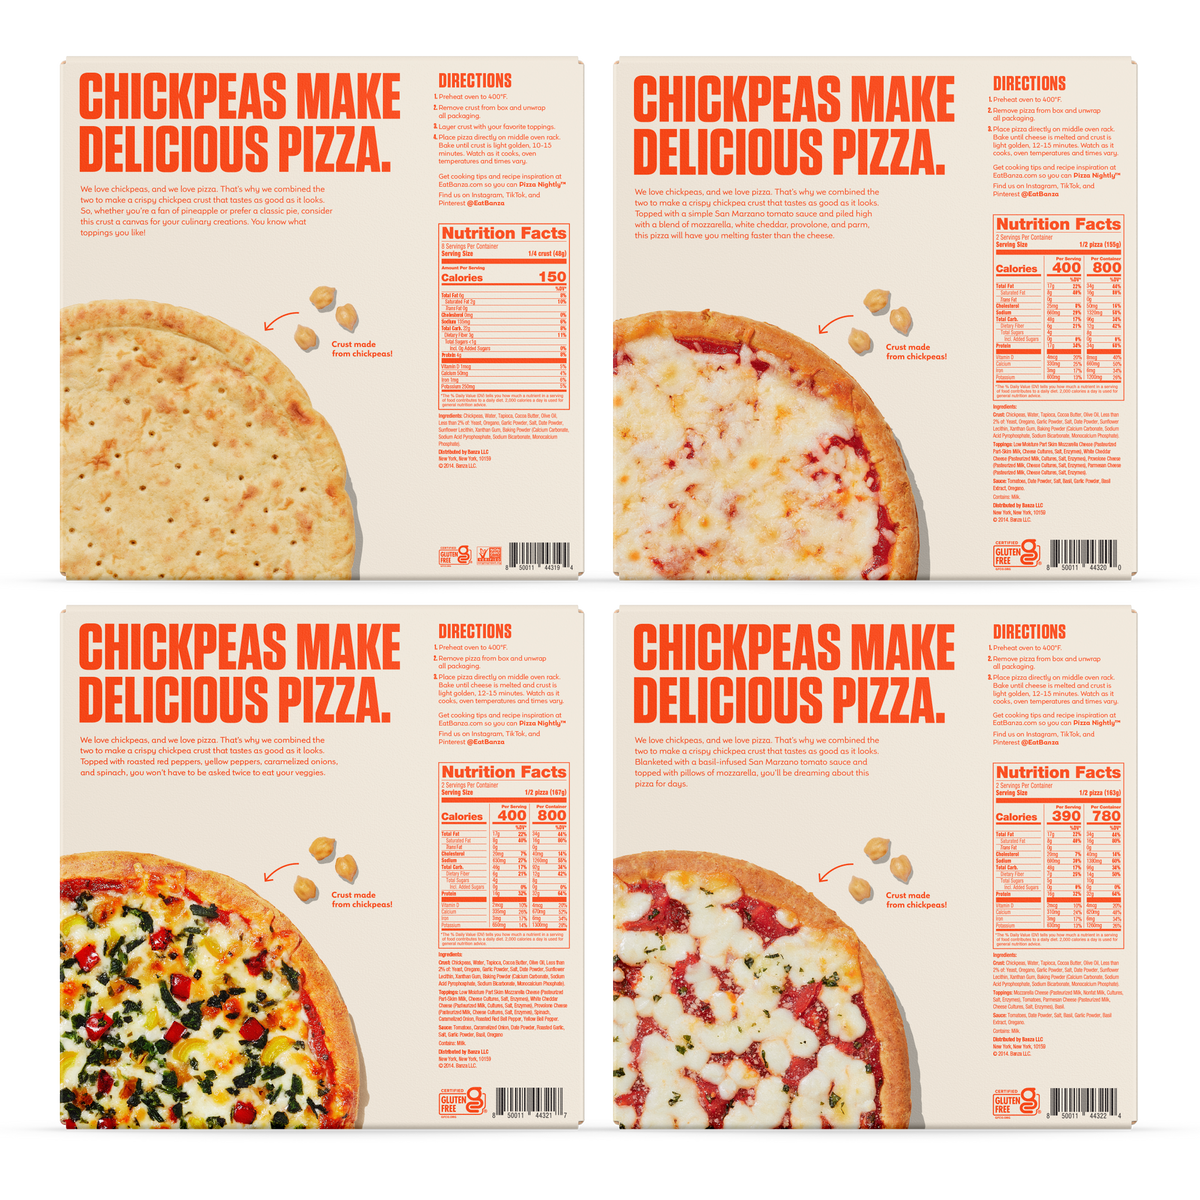 Bestseller Pizza Variety 4-Pack